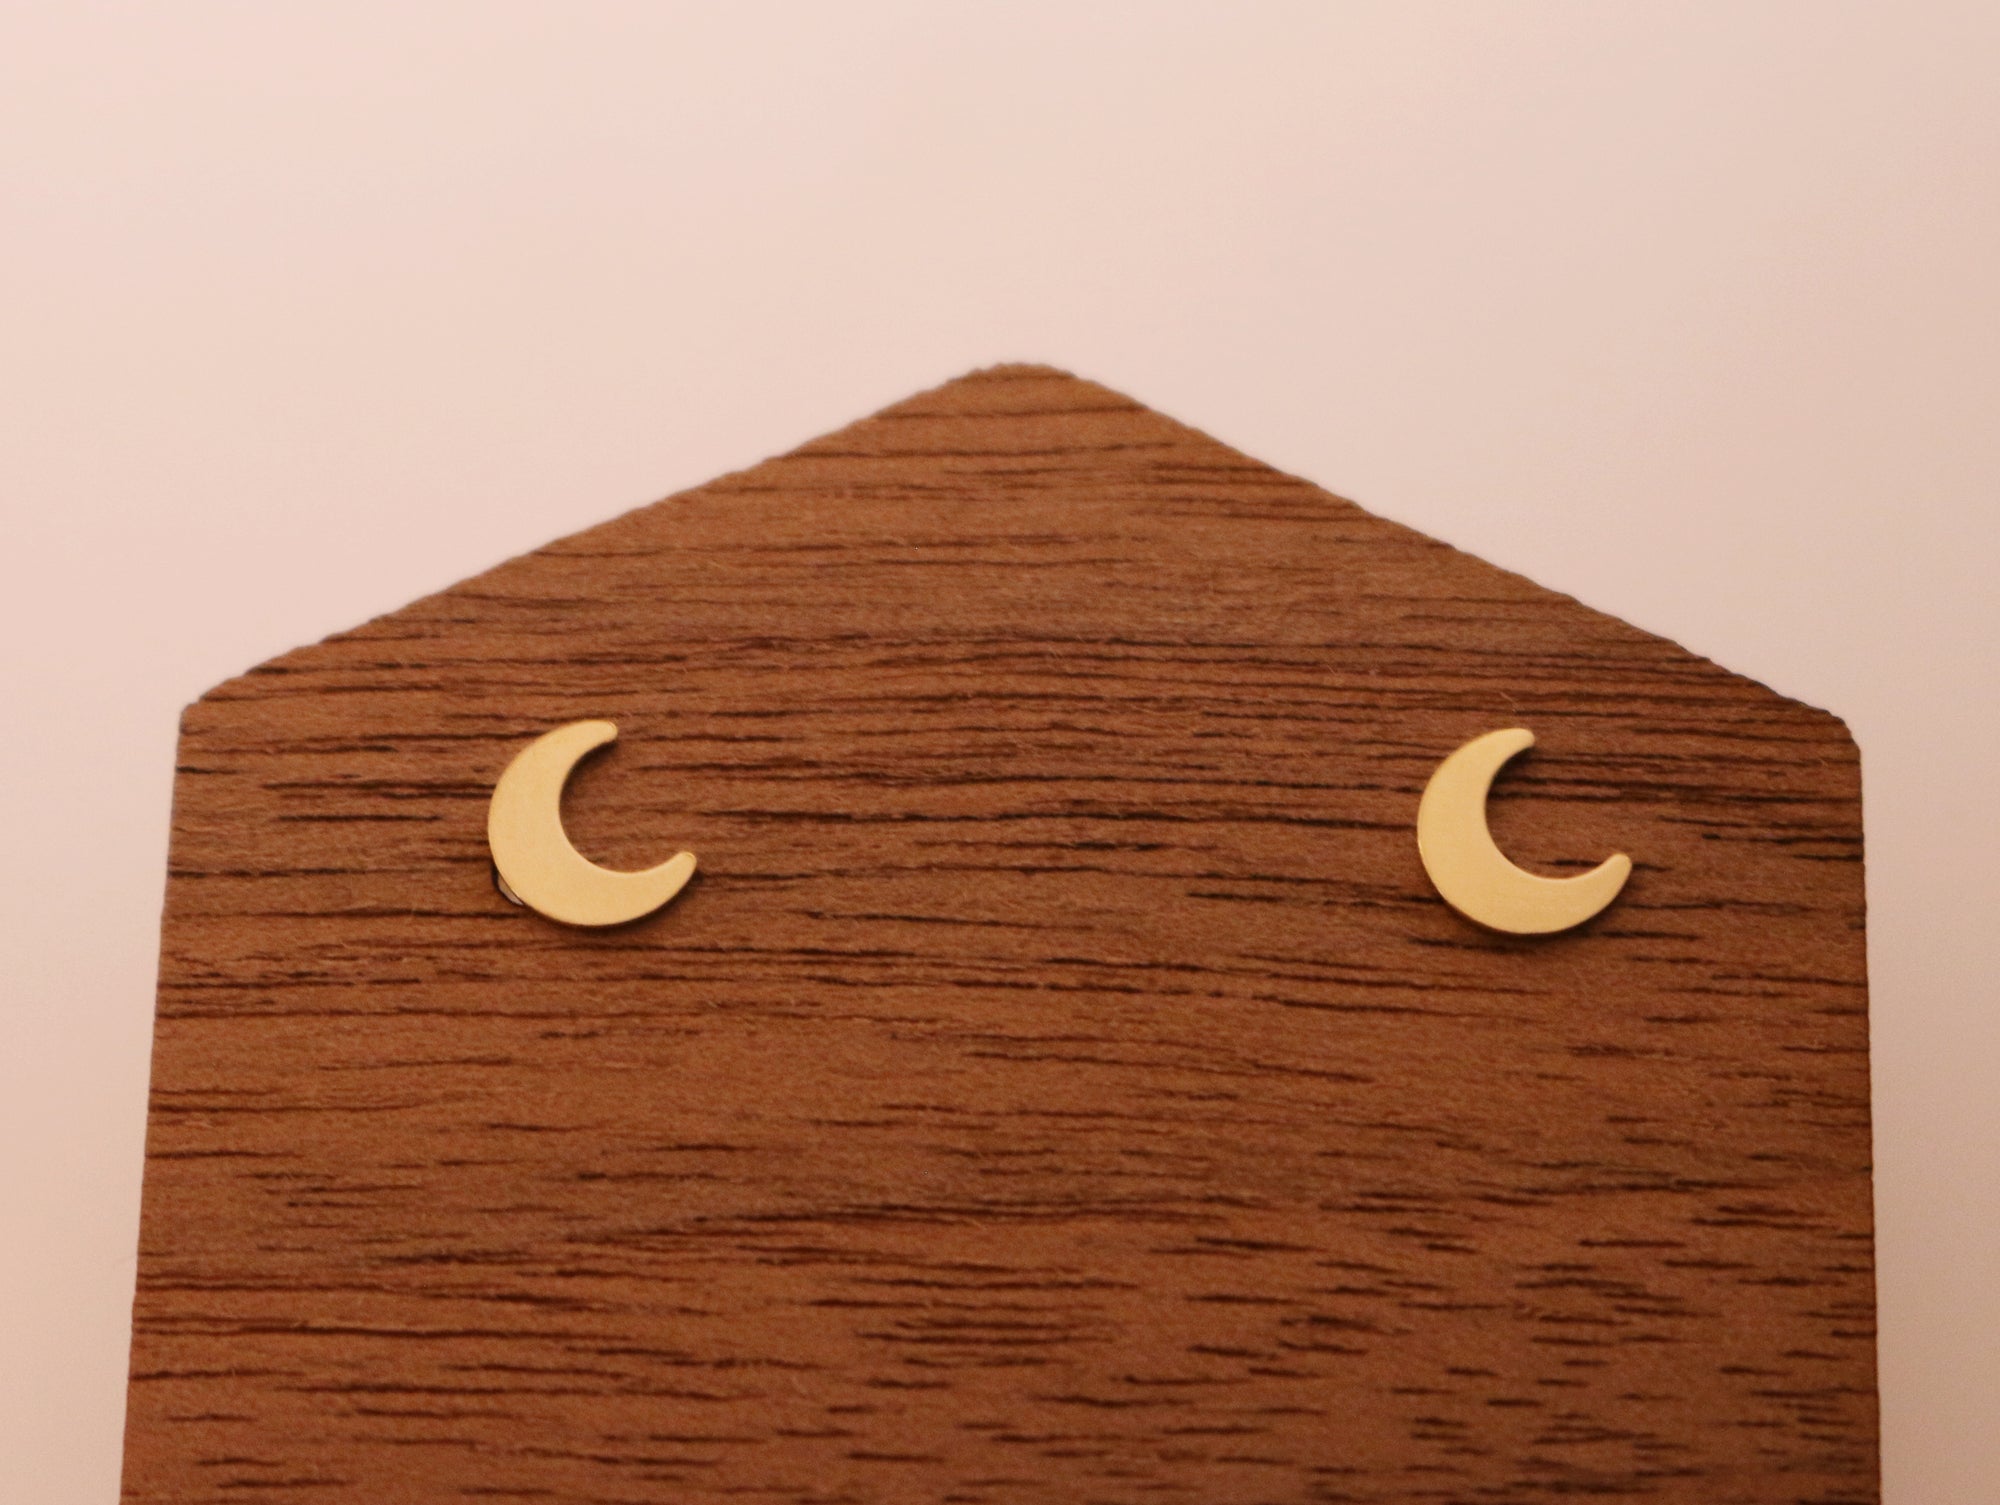 Gold Crescent Moon Stud Earrings